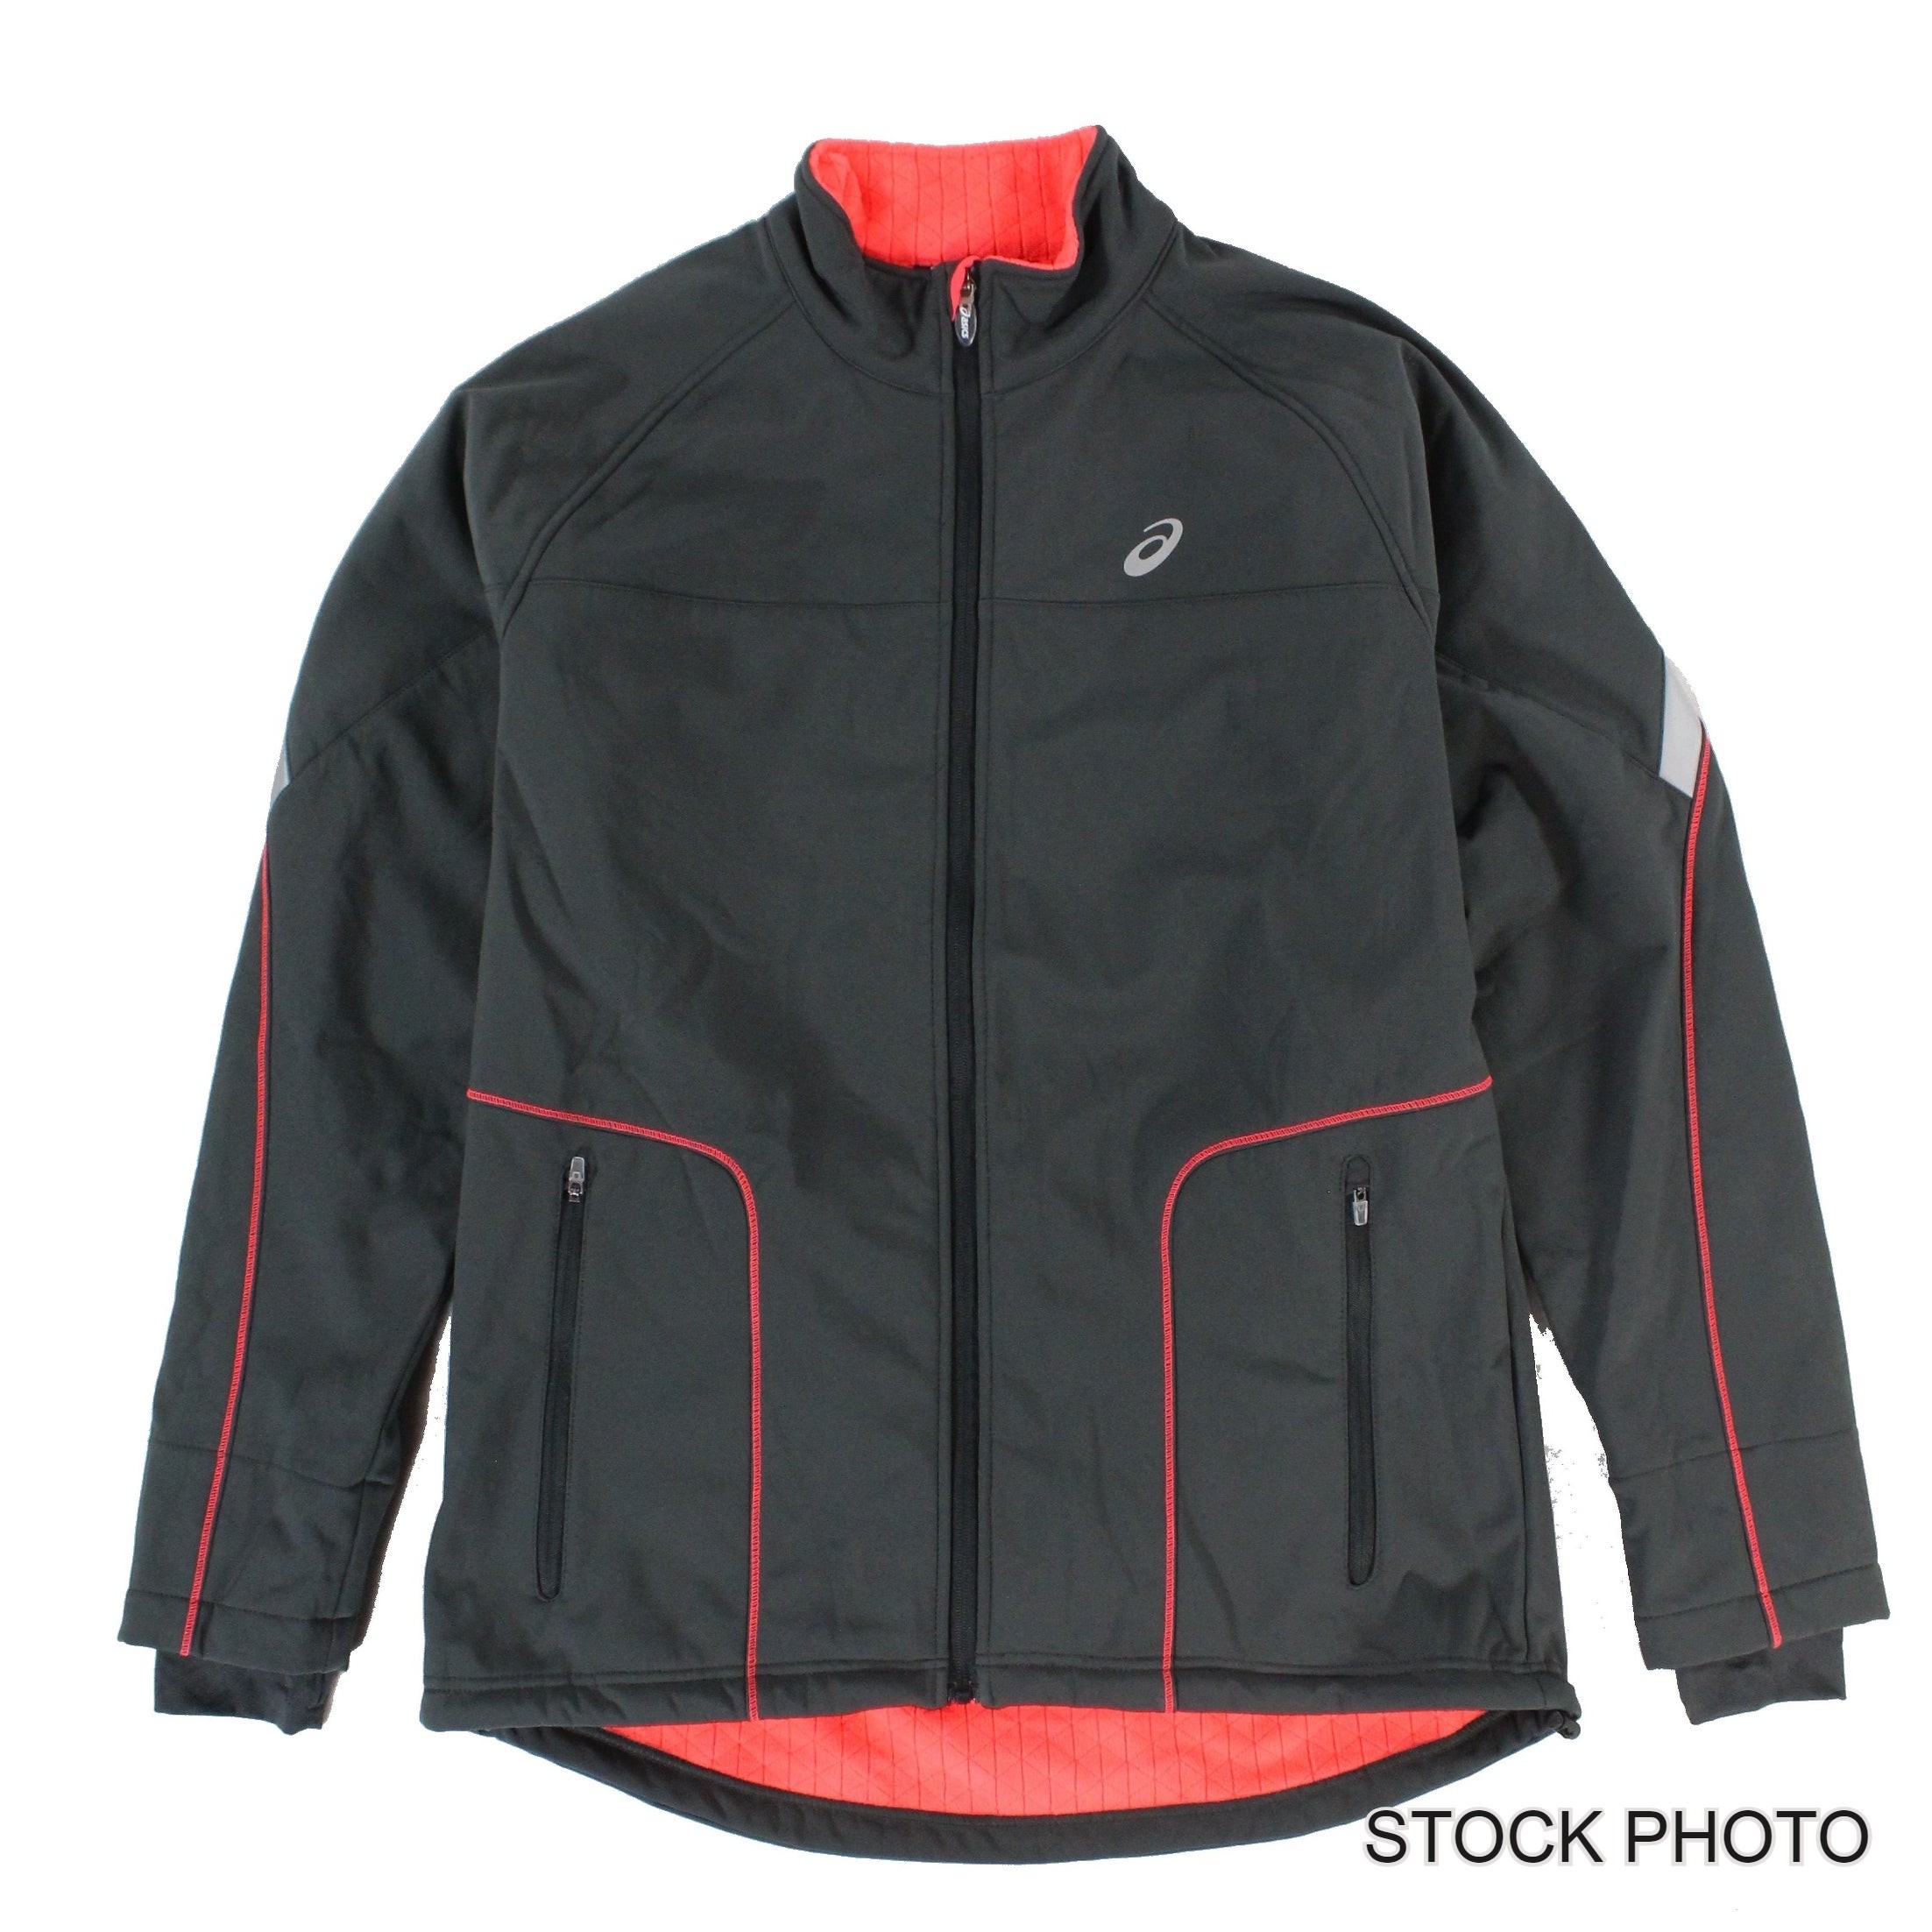 Asics Men's Ultra Waterproof Running Jacket with Reflector Strip, Dark Grey, Medium - image 1 of 6